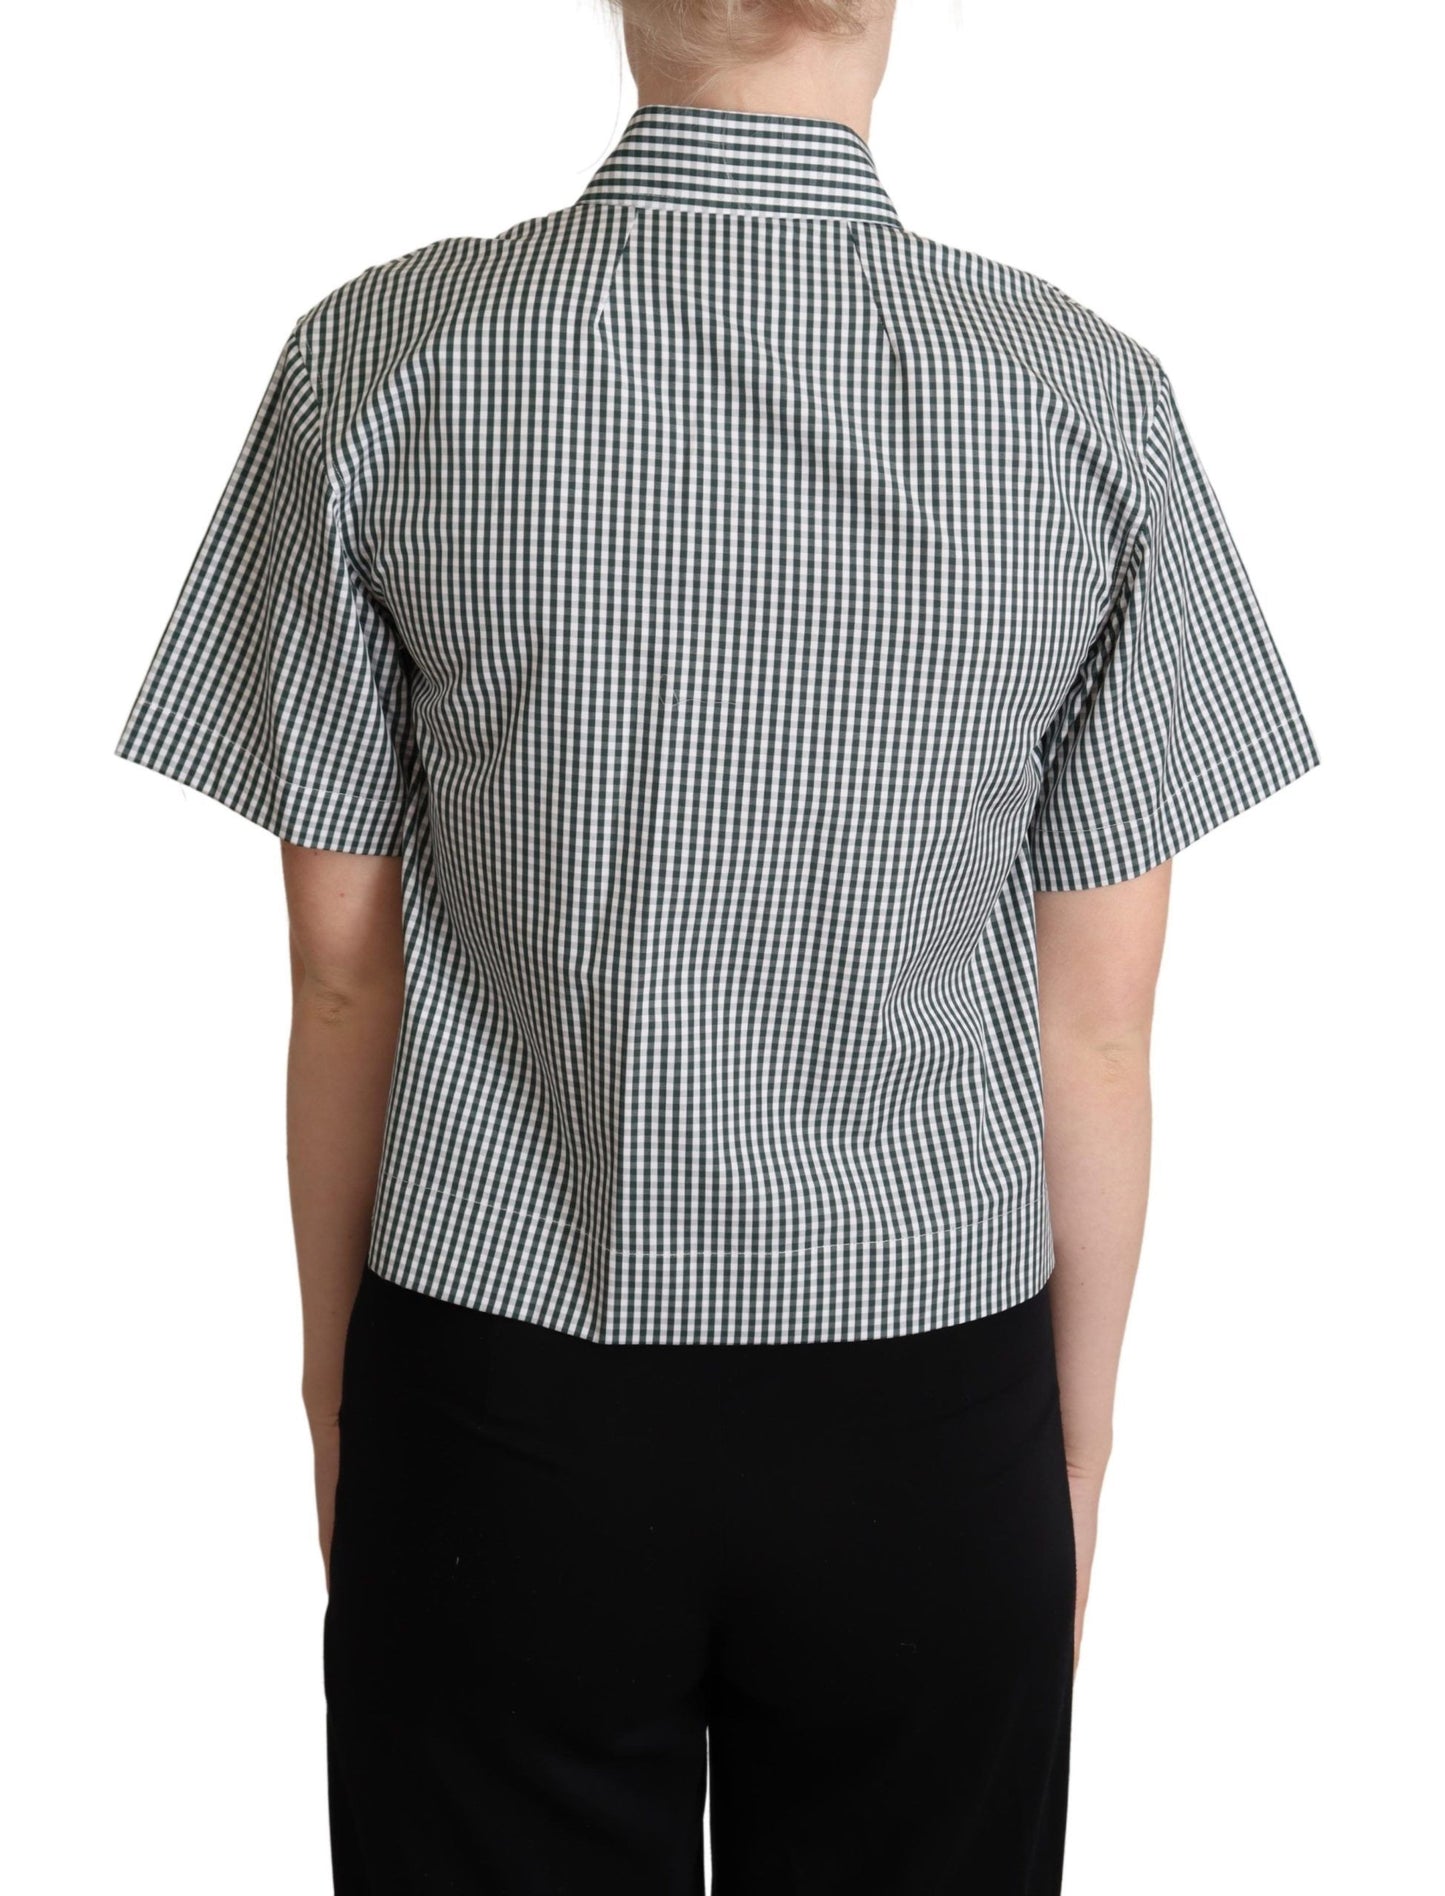 Elegant Checkered Cotton Polo Top